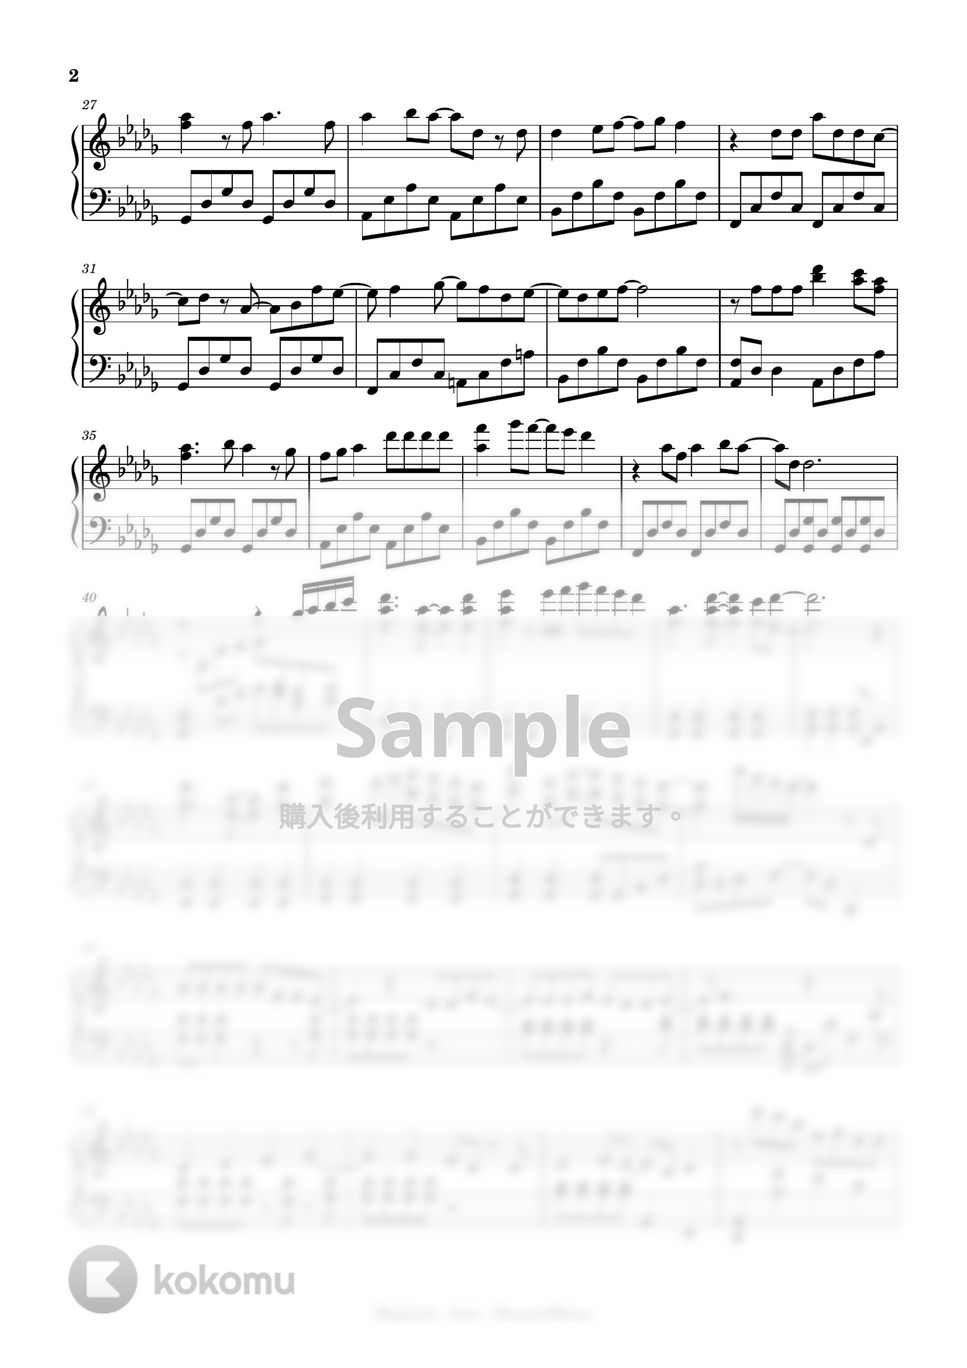 Islet - Haru wo Matsu (intermdiate to advanced, piano) (intermediate to advanced, piano) by Mopianic